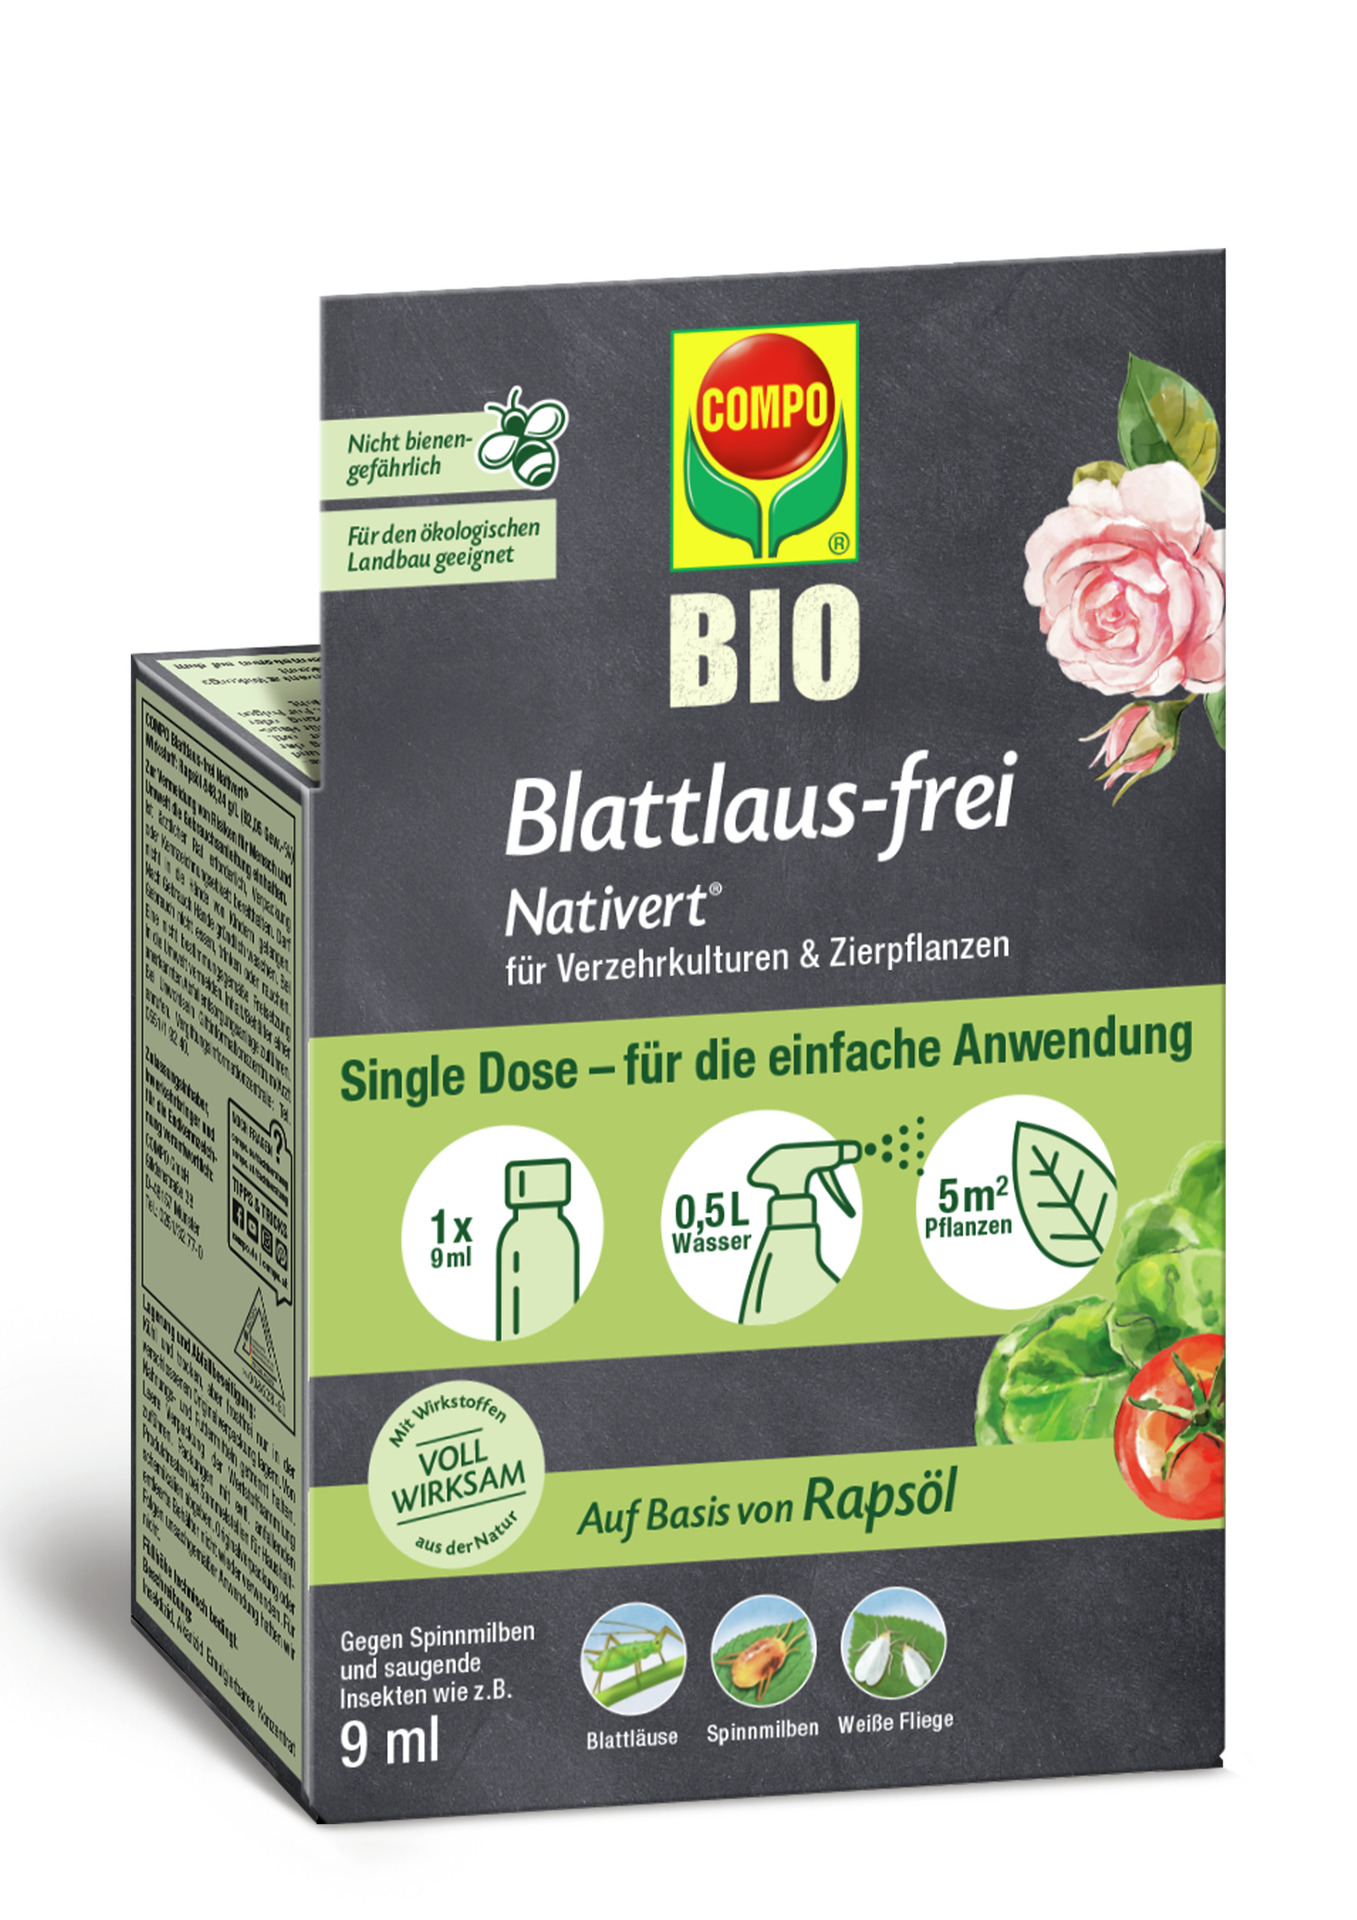 Blattlaus-frei Nativert®